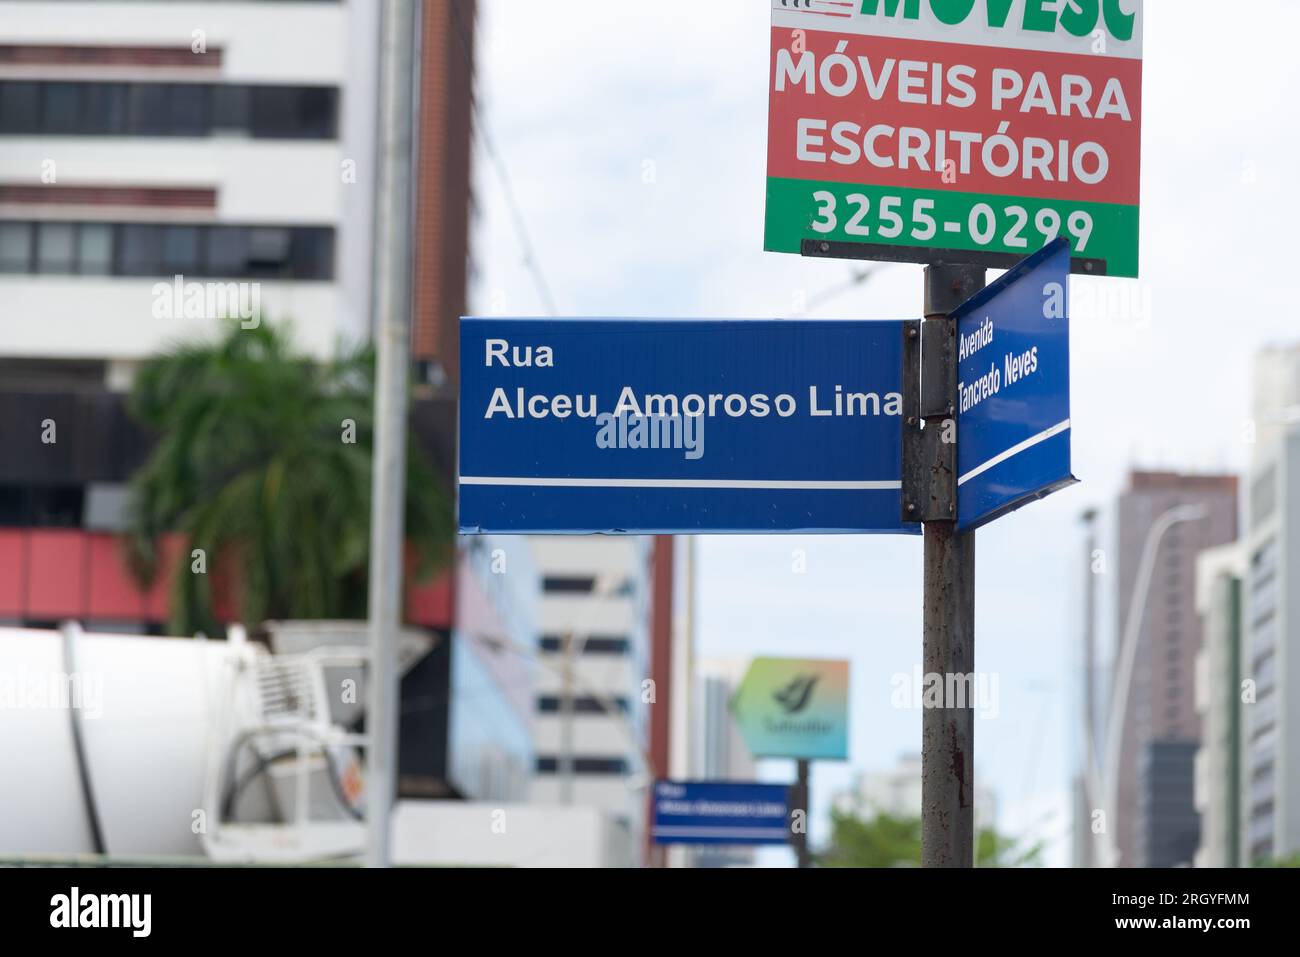 Salvador, Bahia, Brasile - 11 agosto 2023: Segnale stradale che indica Rua Alceu Amoroso Lima e Avenida Tancredo Neves. Città di Salvador, Bahia. Foto Stock